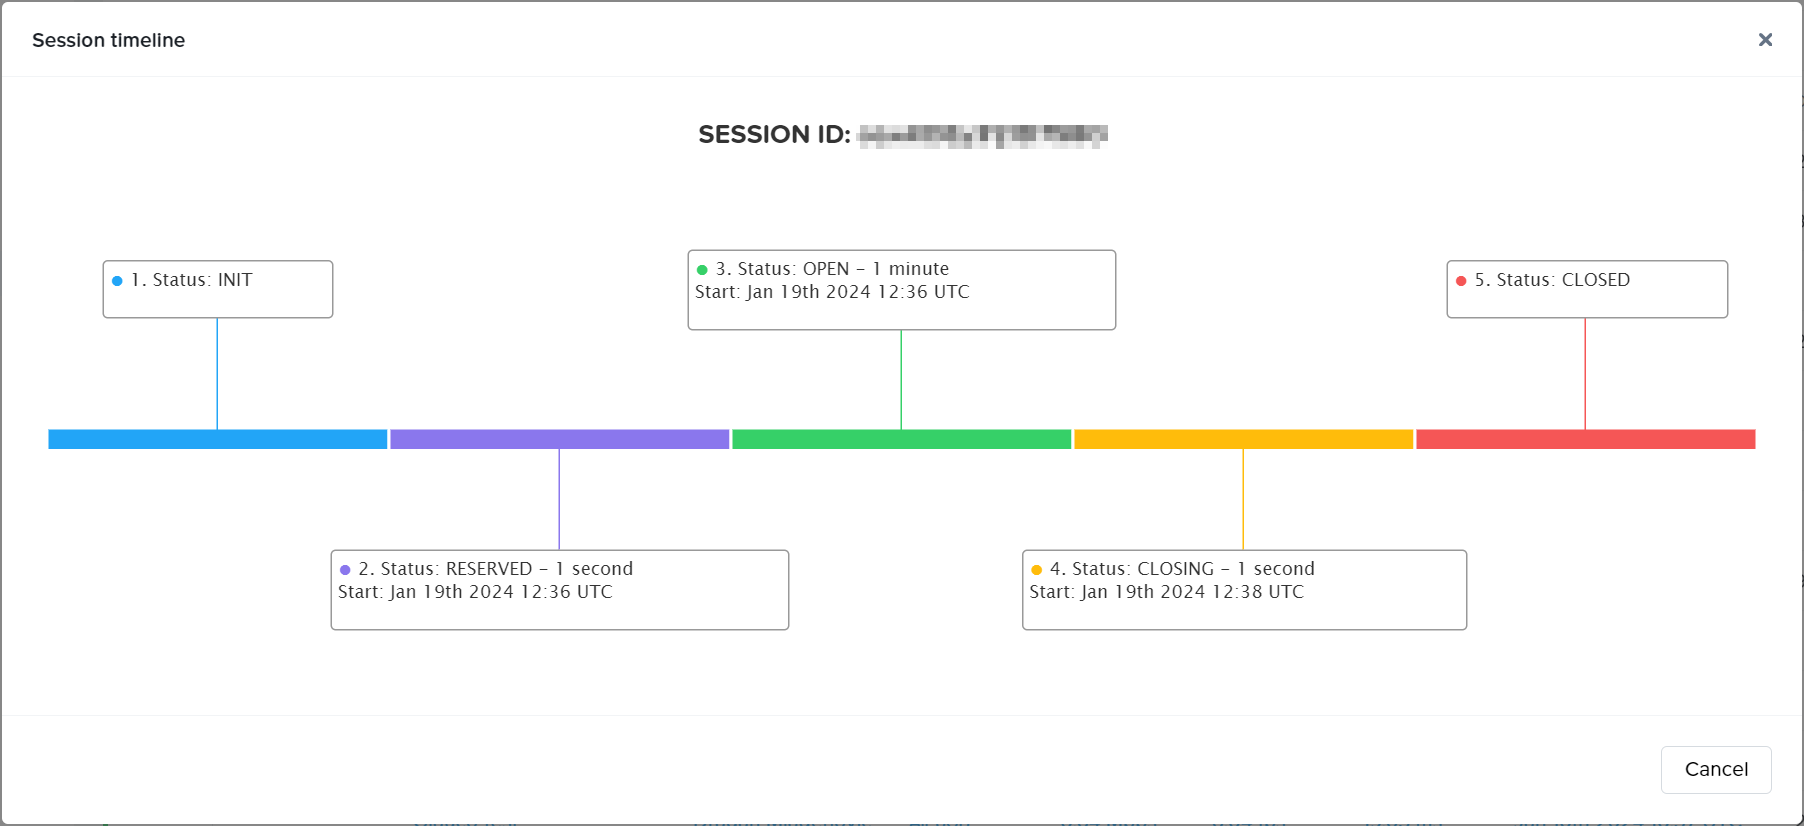 Sessions - Timeline